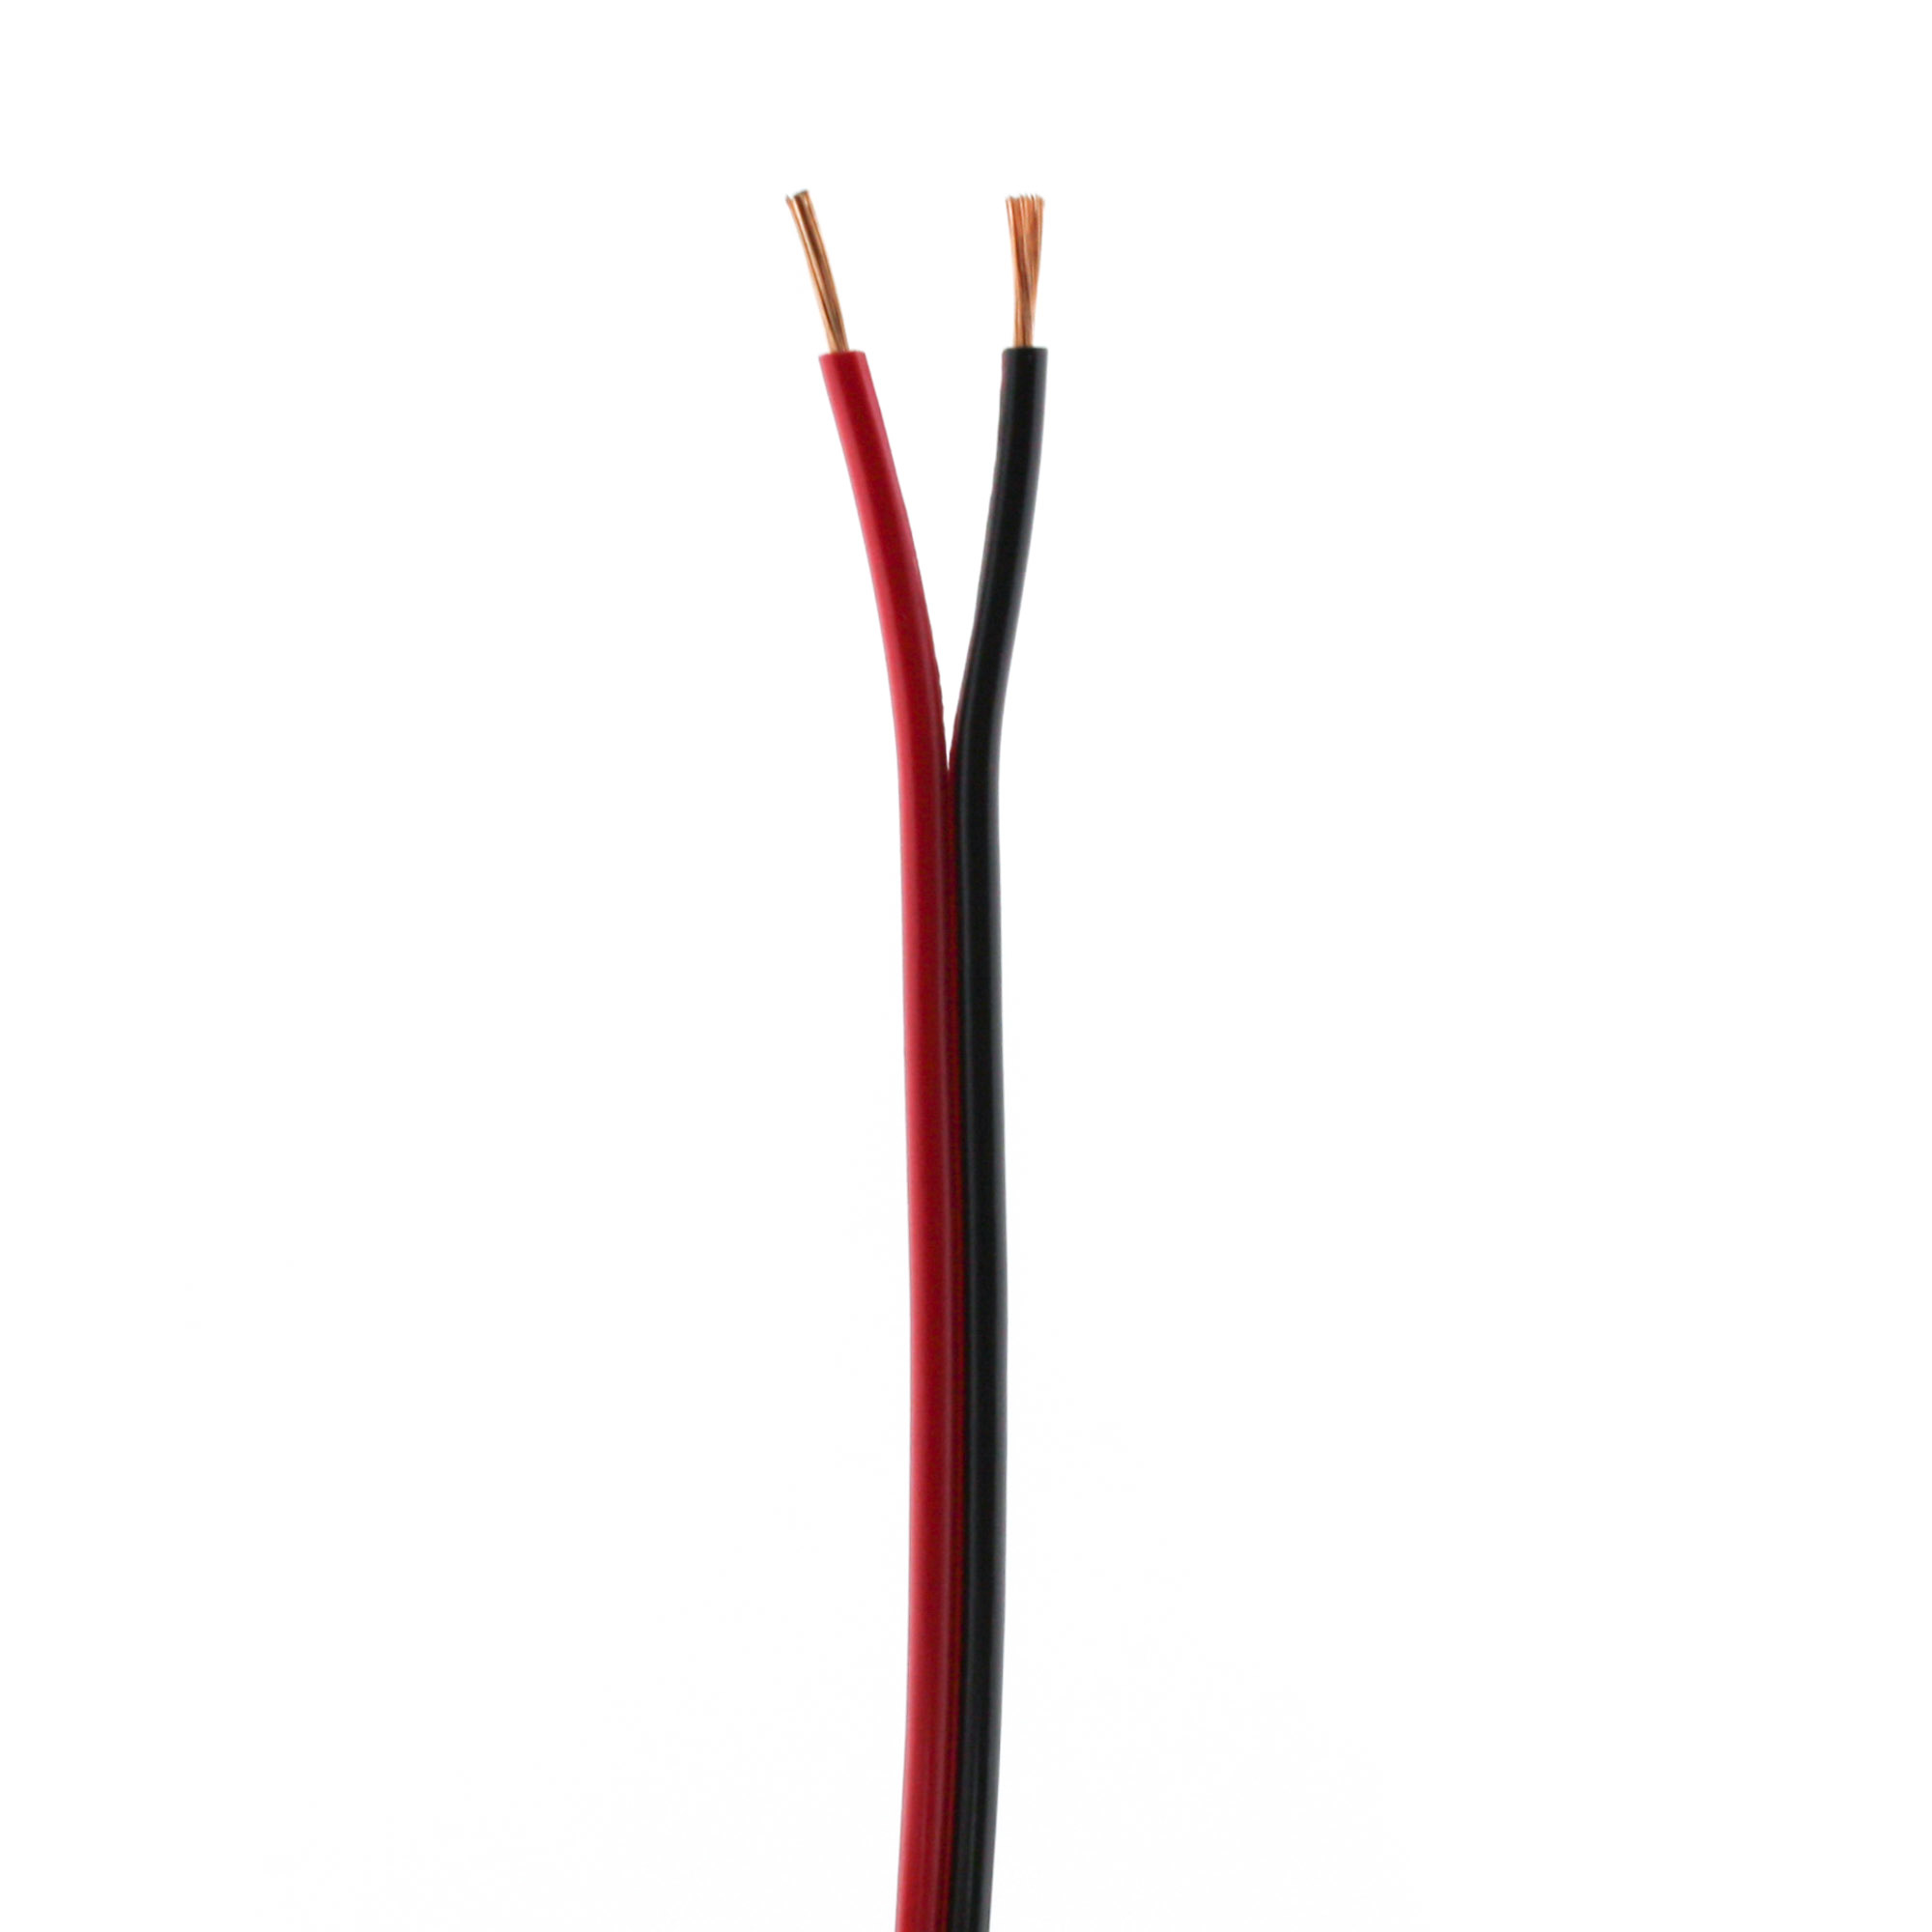 Loudspeaker cable red-black 25m 0.50mm